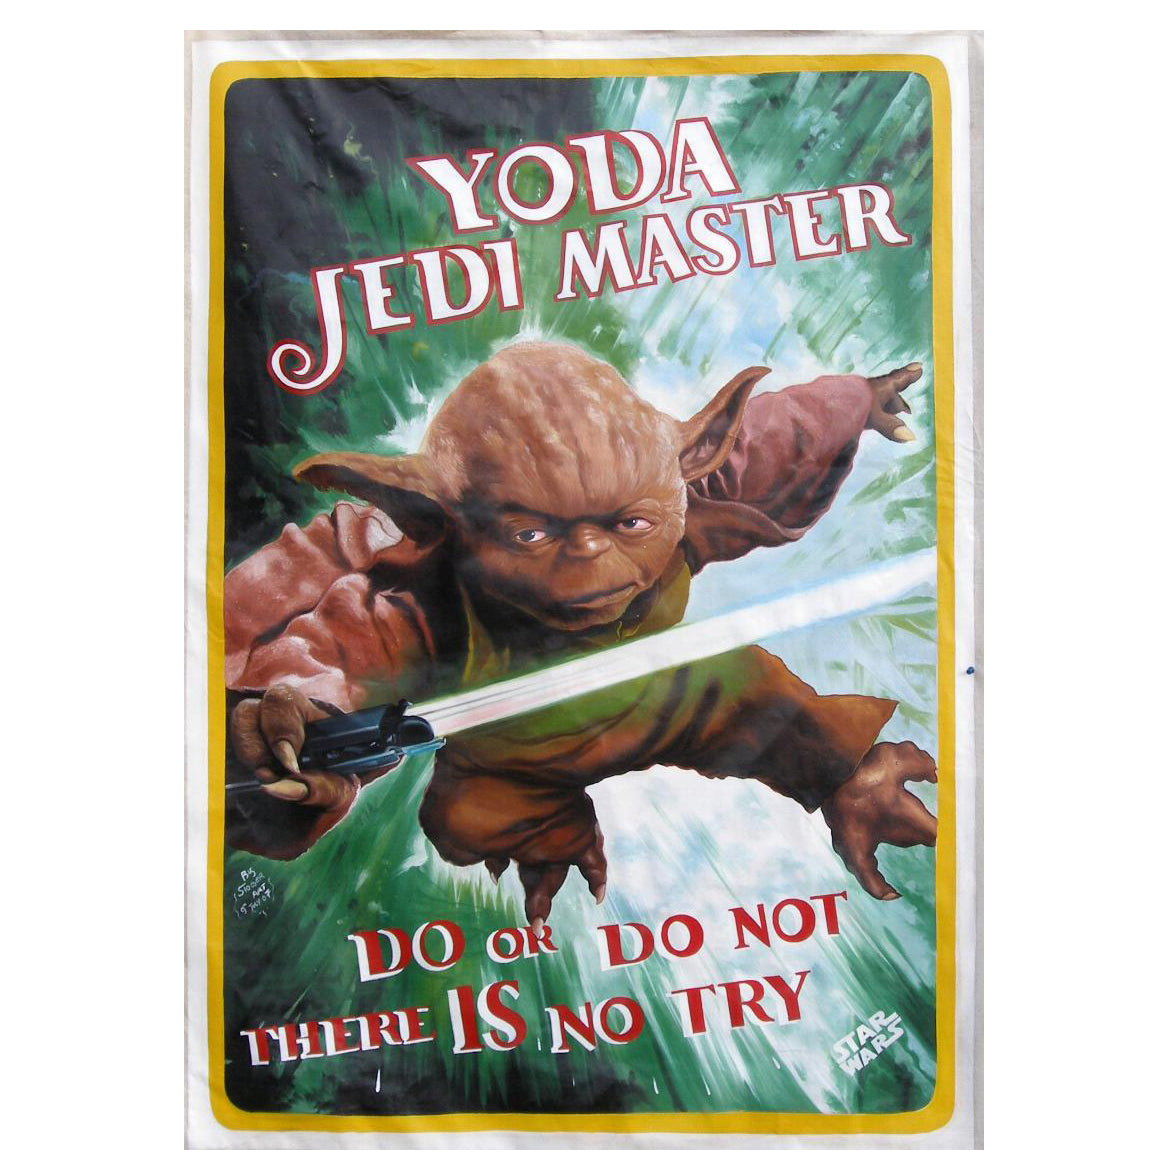 Yoda Star Wars V - The Empire Strikes movie poster hand painted in Ghana for Cinema Art